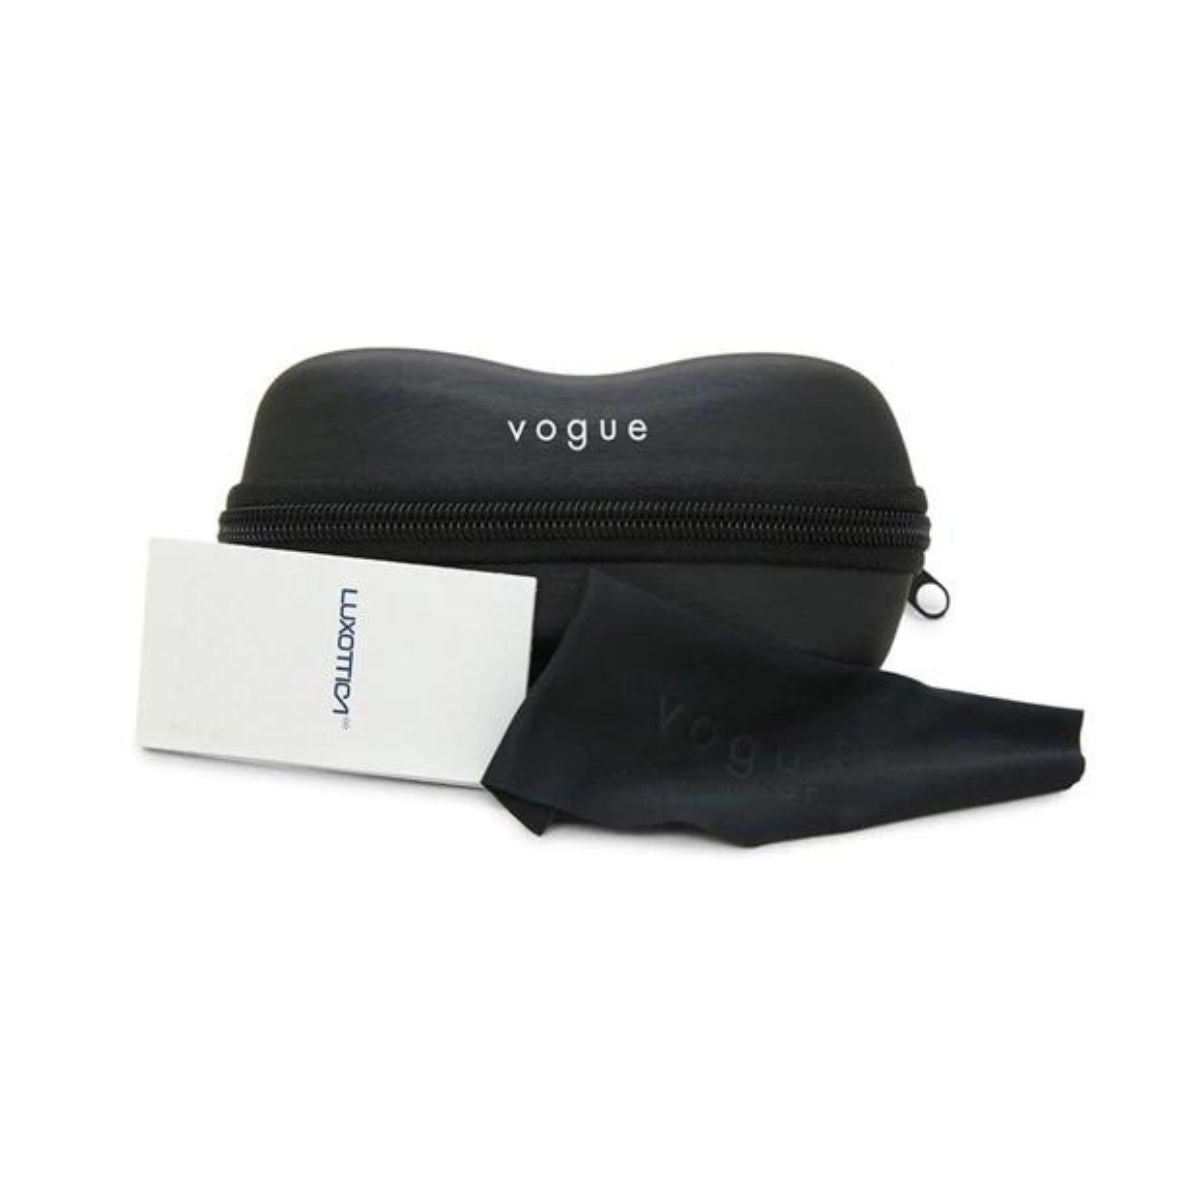 "Buy Online Vogue 5535 W44/11 Stylish Sunglass For Women's At Optorium"